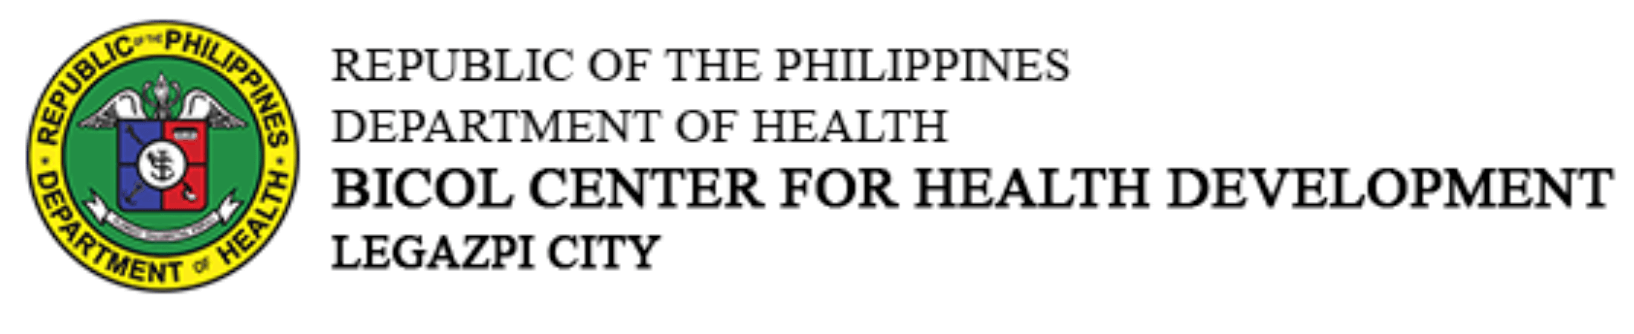 Department Of Health Bicol Center for Health Development